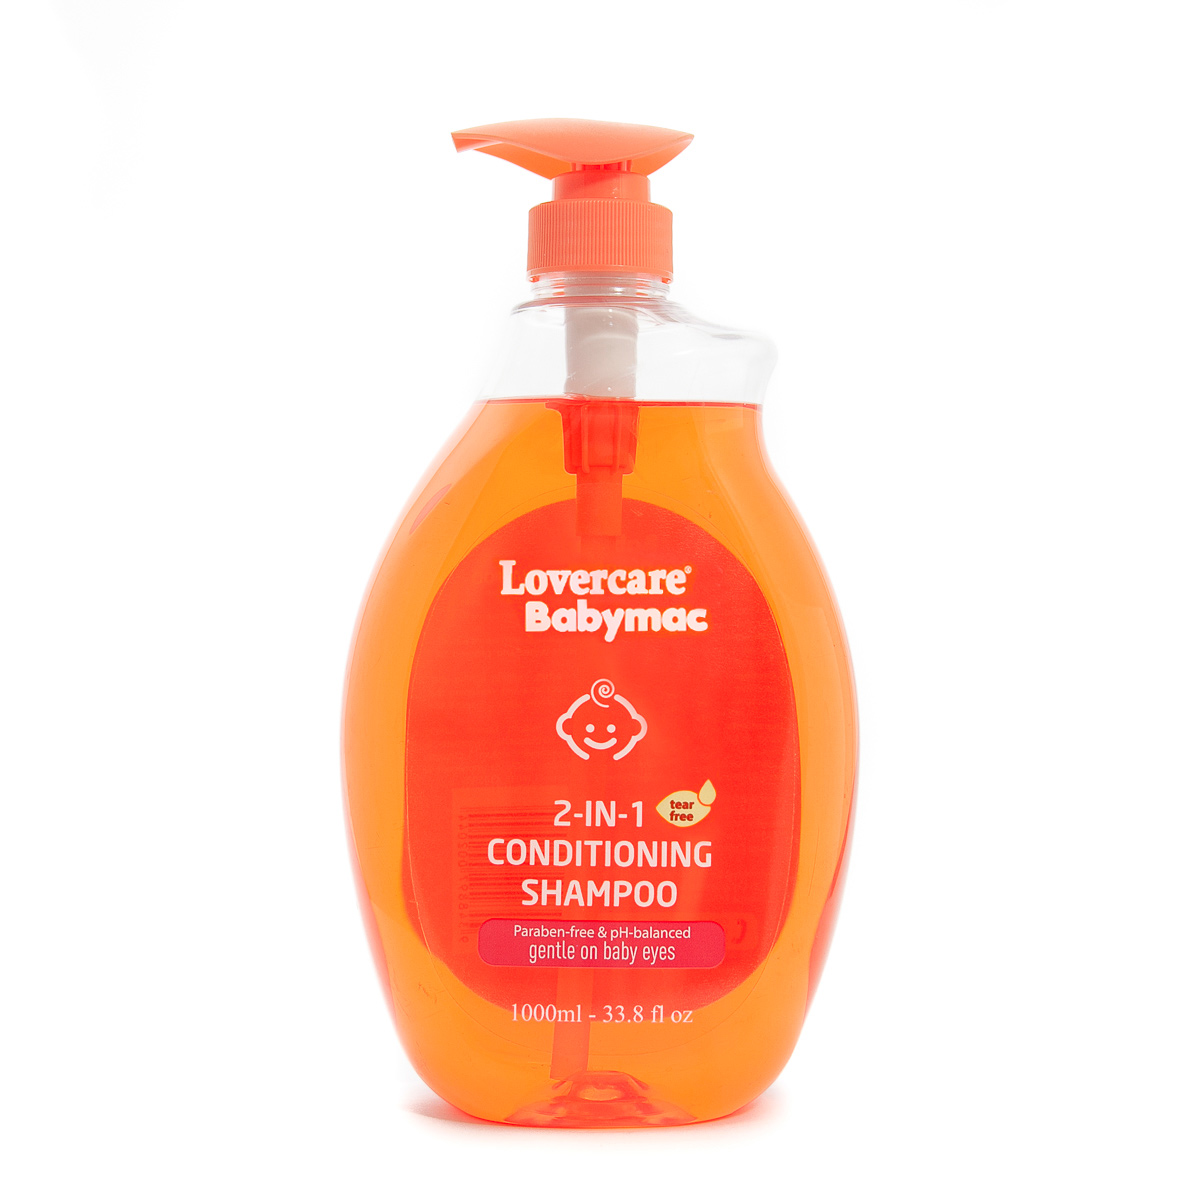 Lovercare Babymac 2-in-1 Conditioning Shampoo - 1000ml - 33.8 fl oz